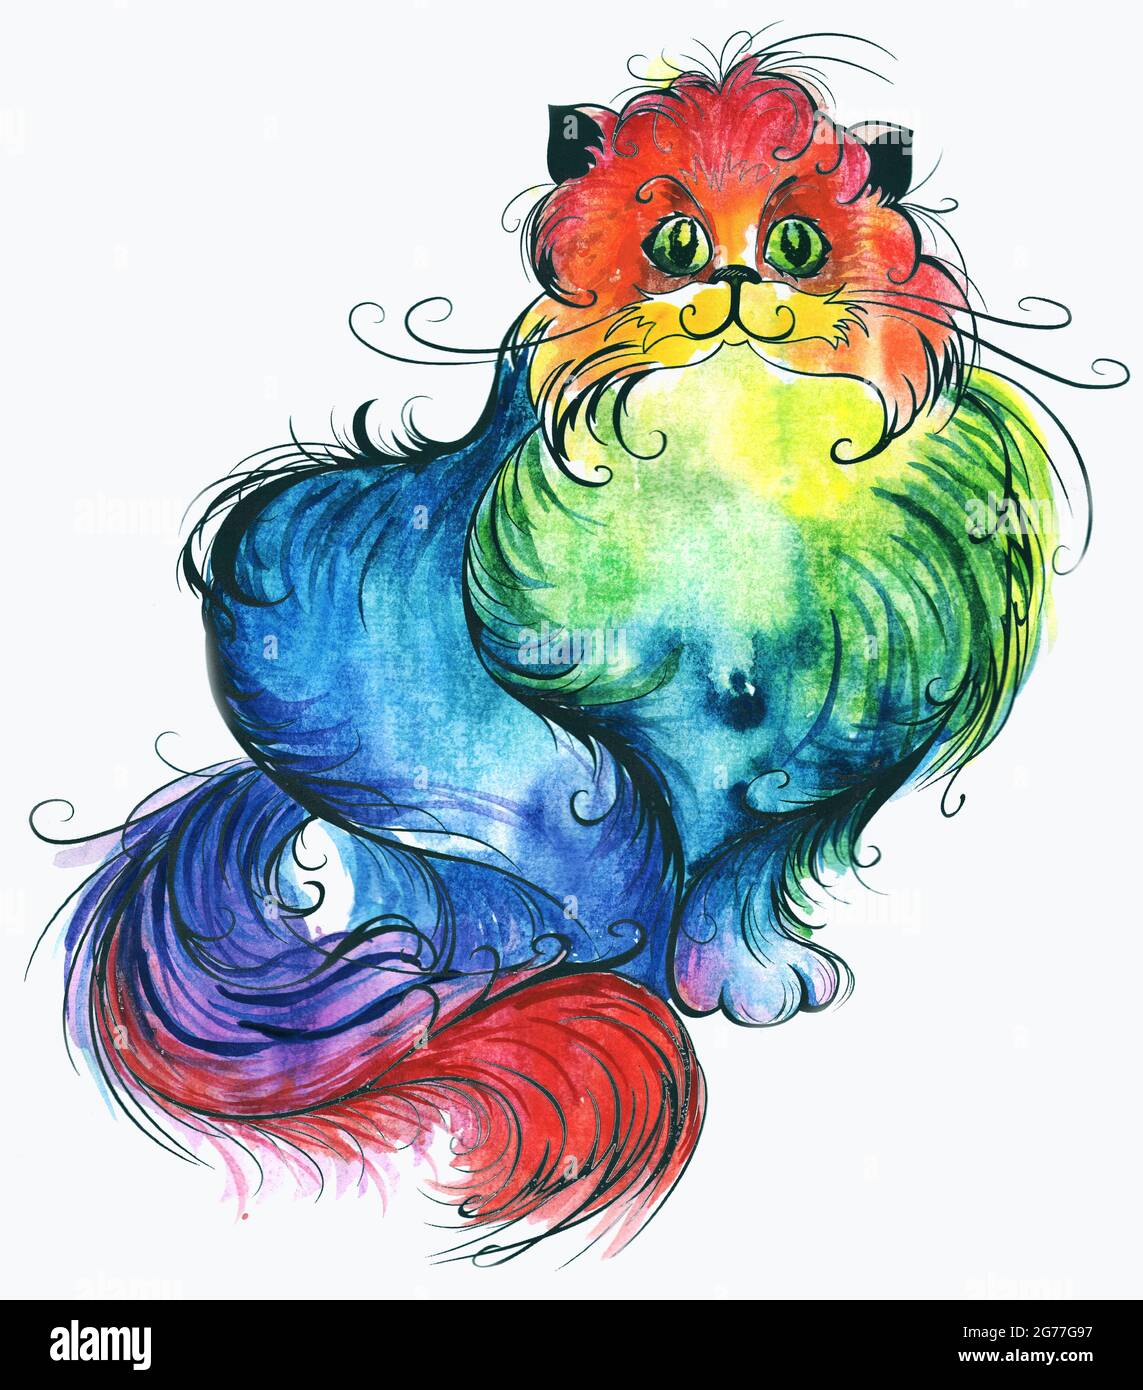 Felino morbido, dipinto con multicolore, arcobaleno, brillante vernice acquerello. Foto Stock